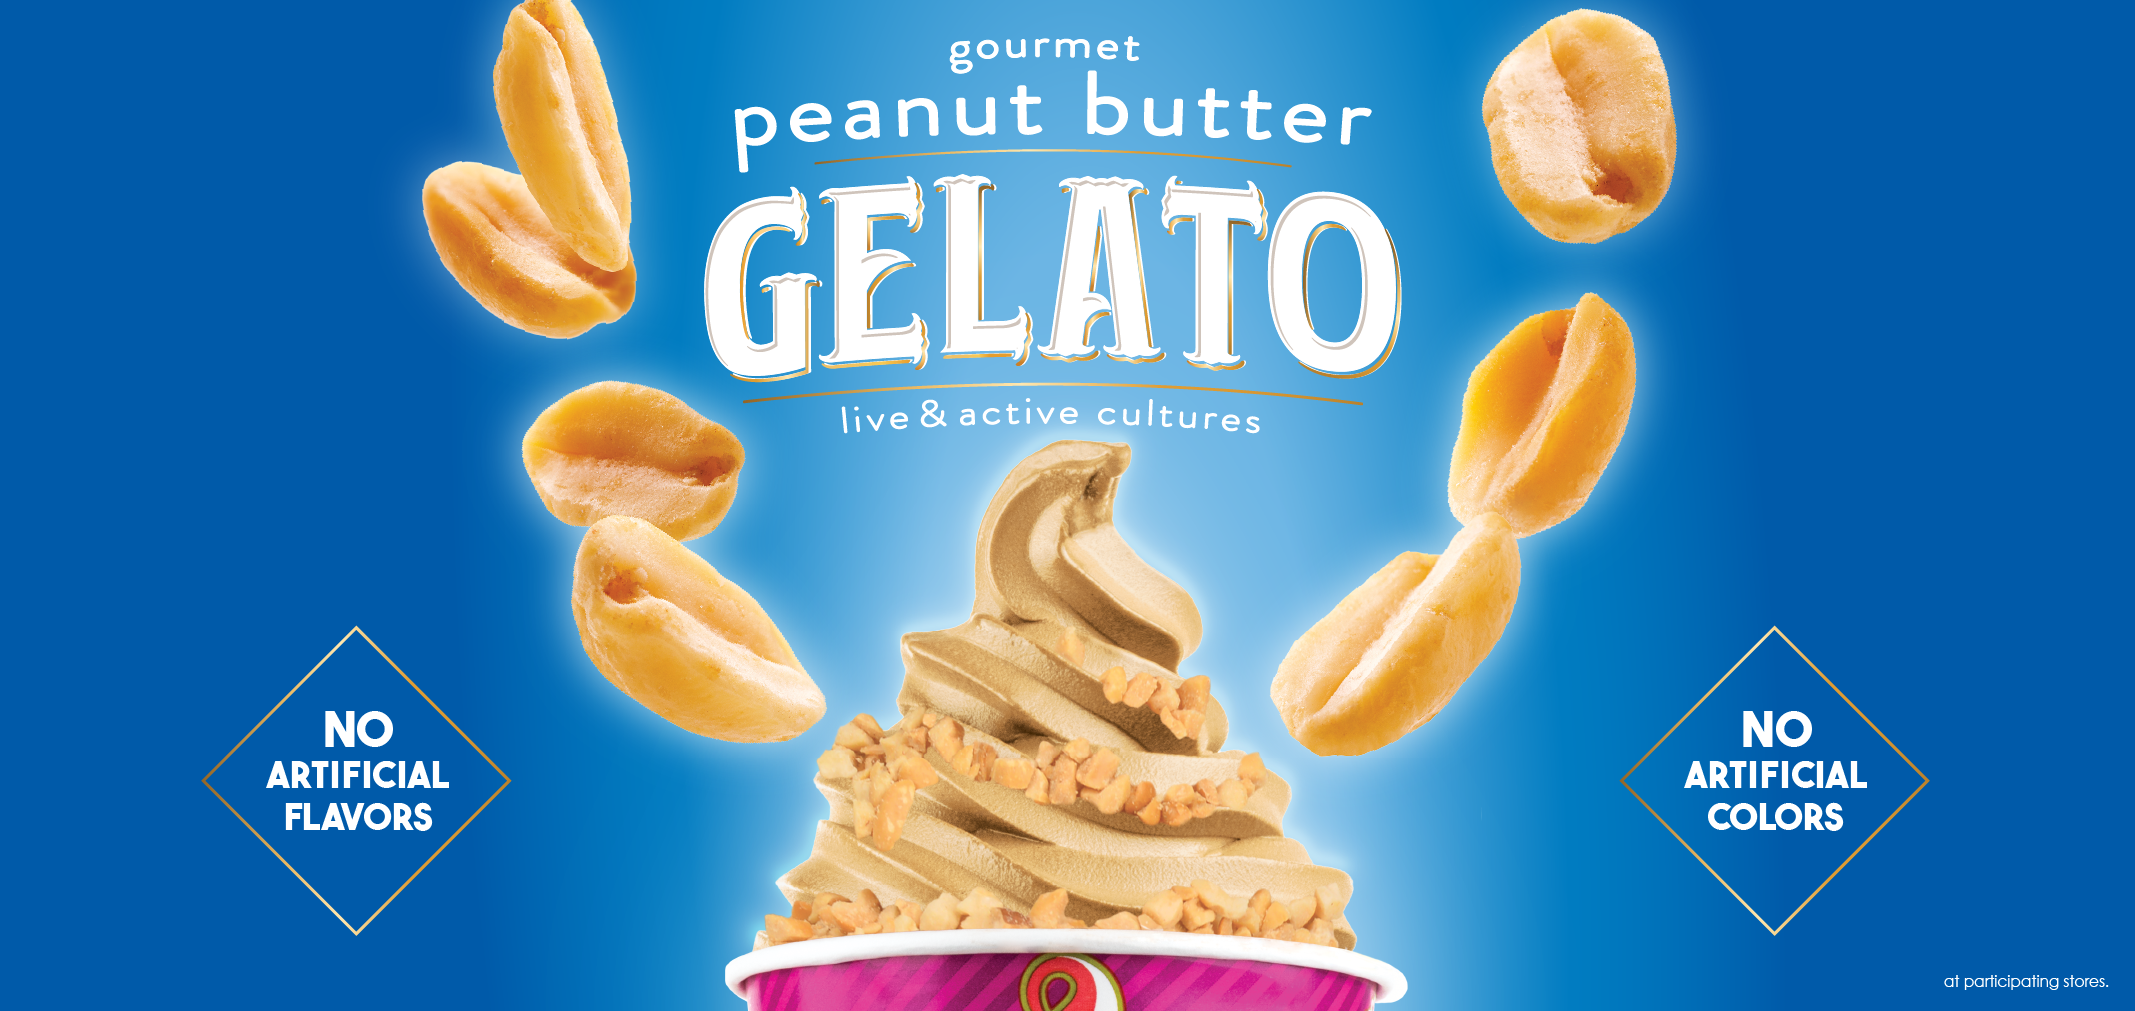 Gourmet Peanut Butter Gelato label image